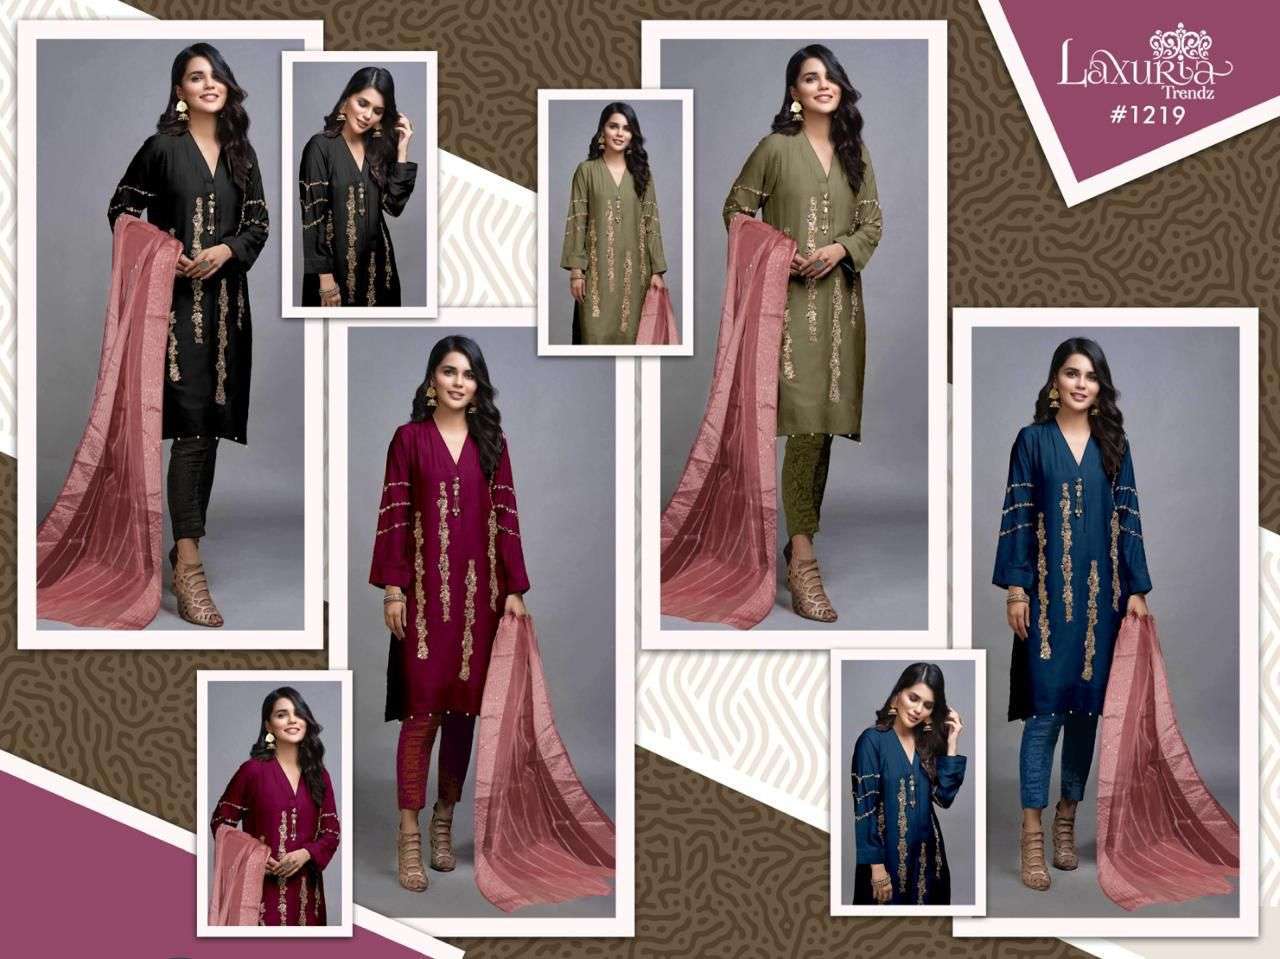 poomex brand night pants - Lakshmi's Trends Bagalur